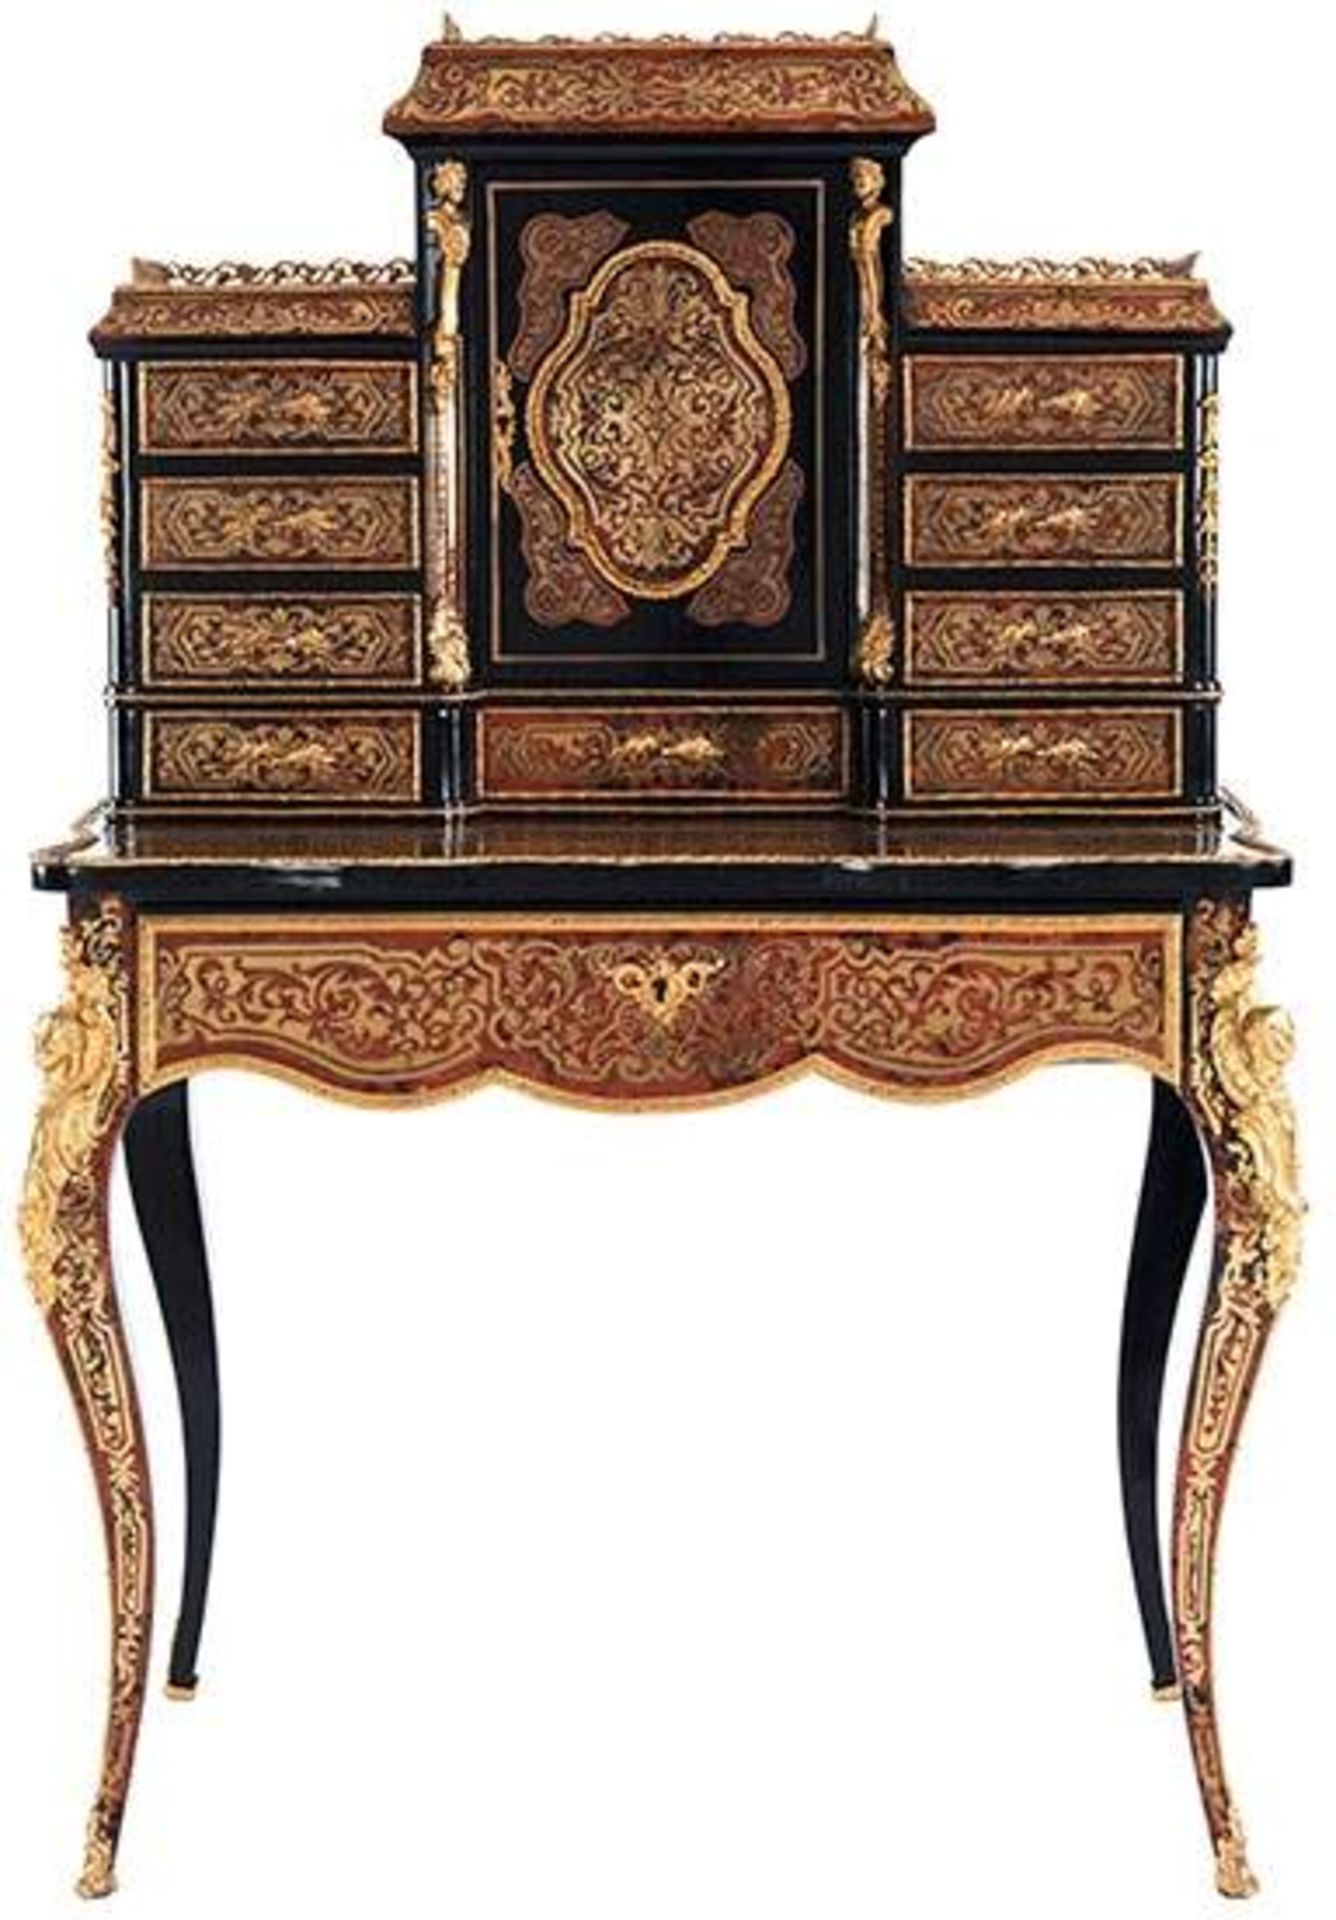 Magnificent Napoleon III bureau cabinet with Boulle-style marquetryHeight: 132 cm. Width: ca. 89 cm. - Bild 2 aus 5